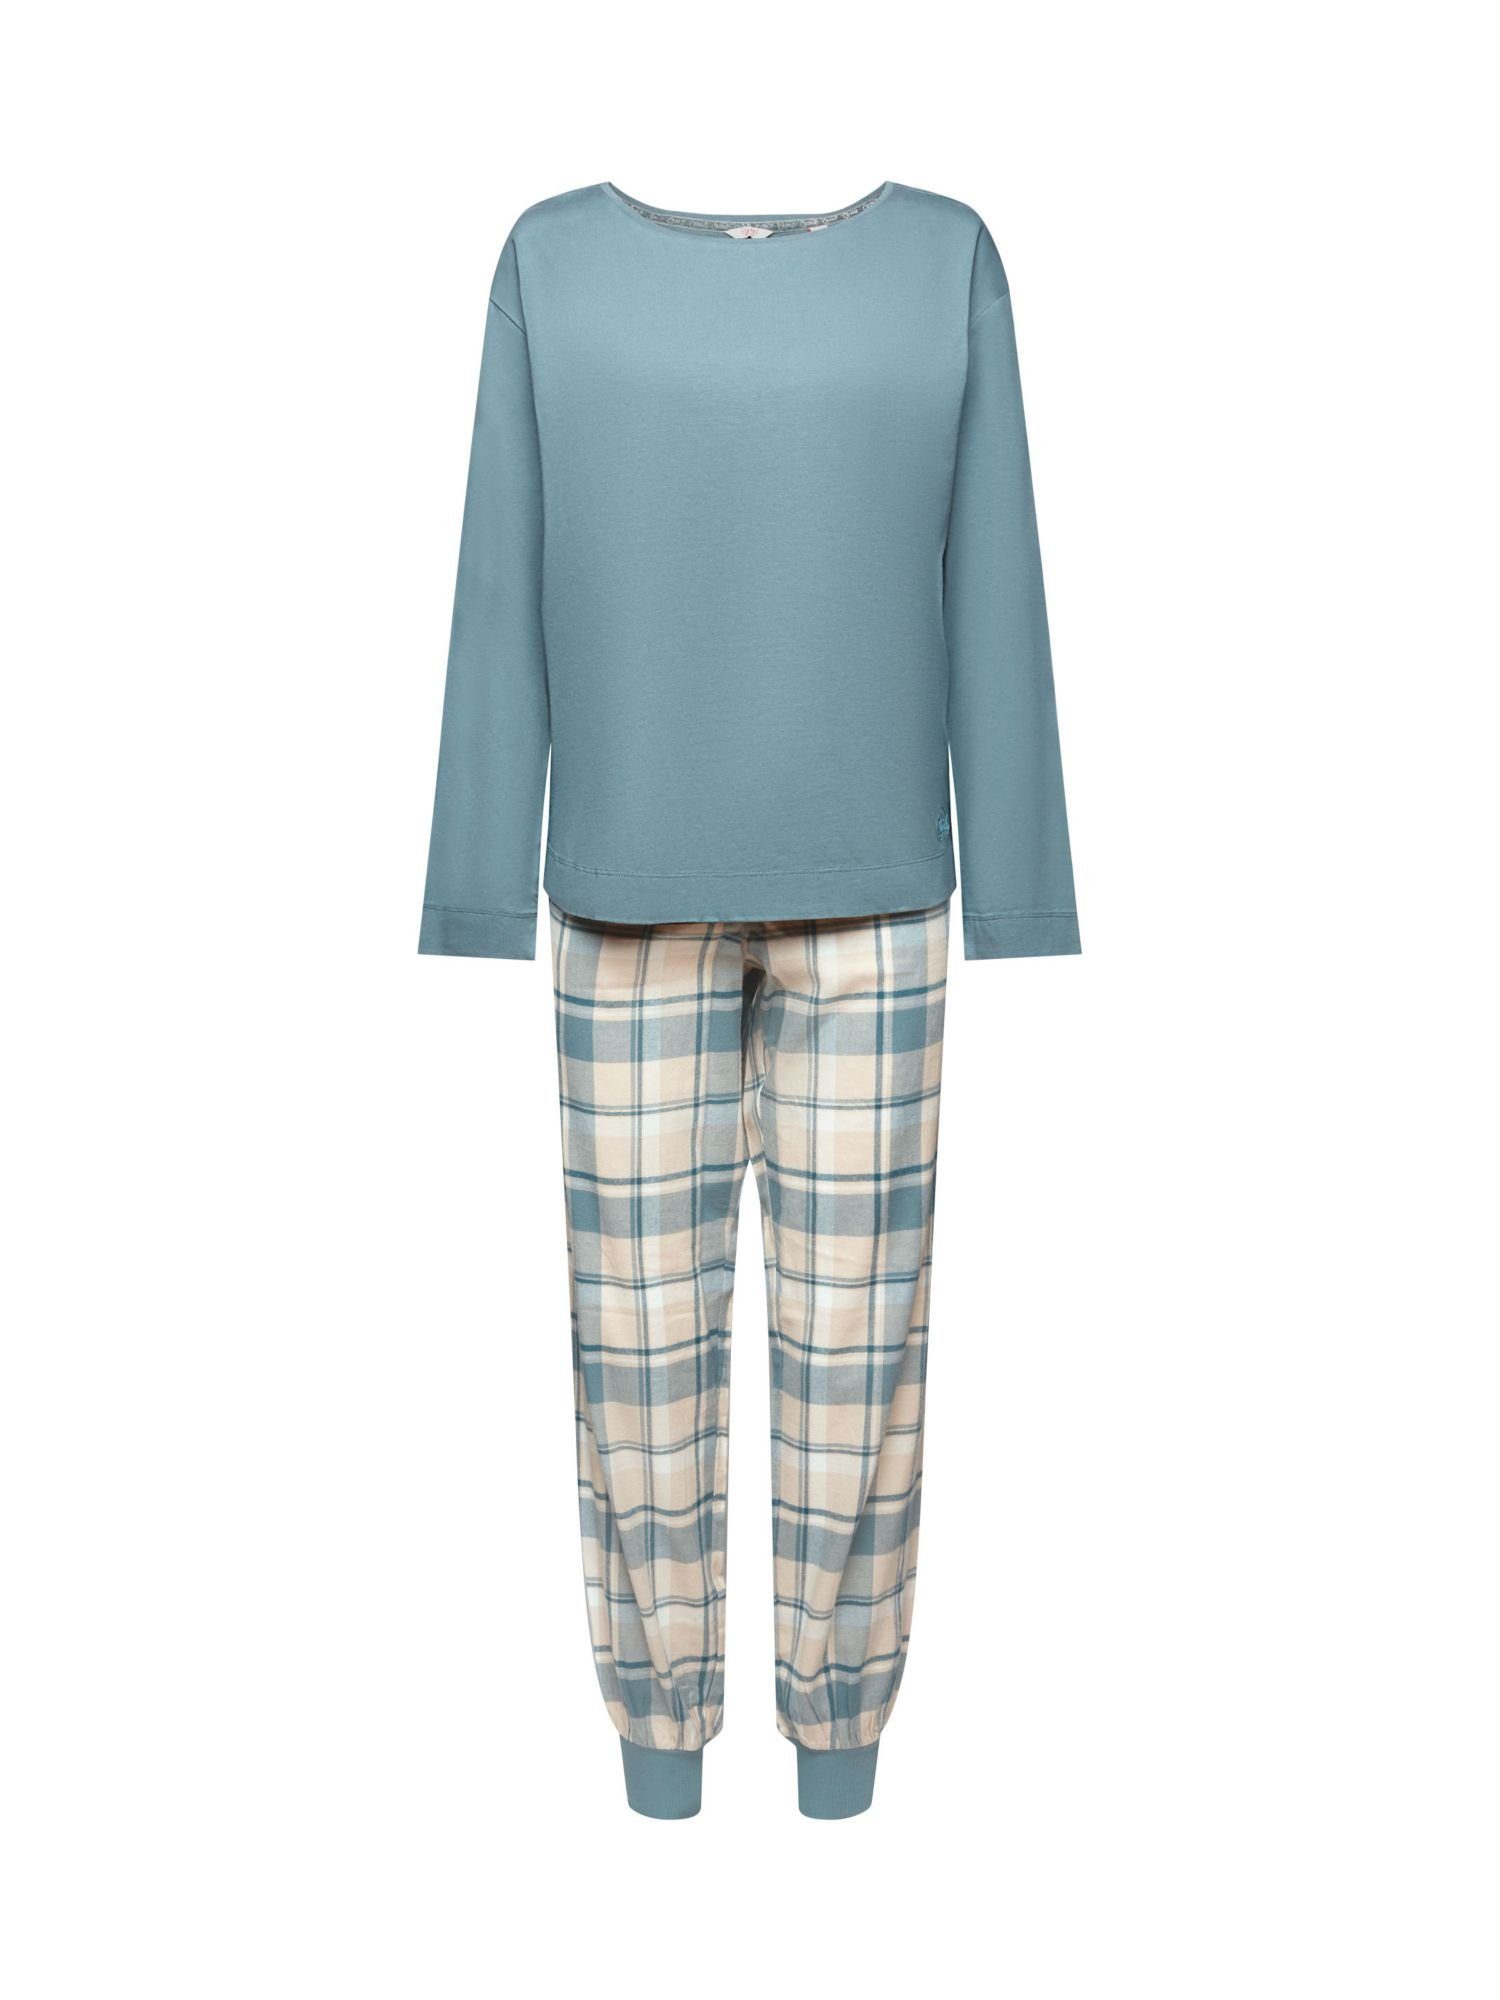 Esprit Pyjama Pyjama-Set aus kariertem Flanell NEW TEAL BLUE